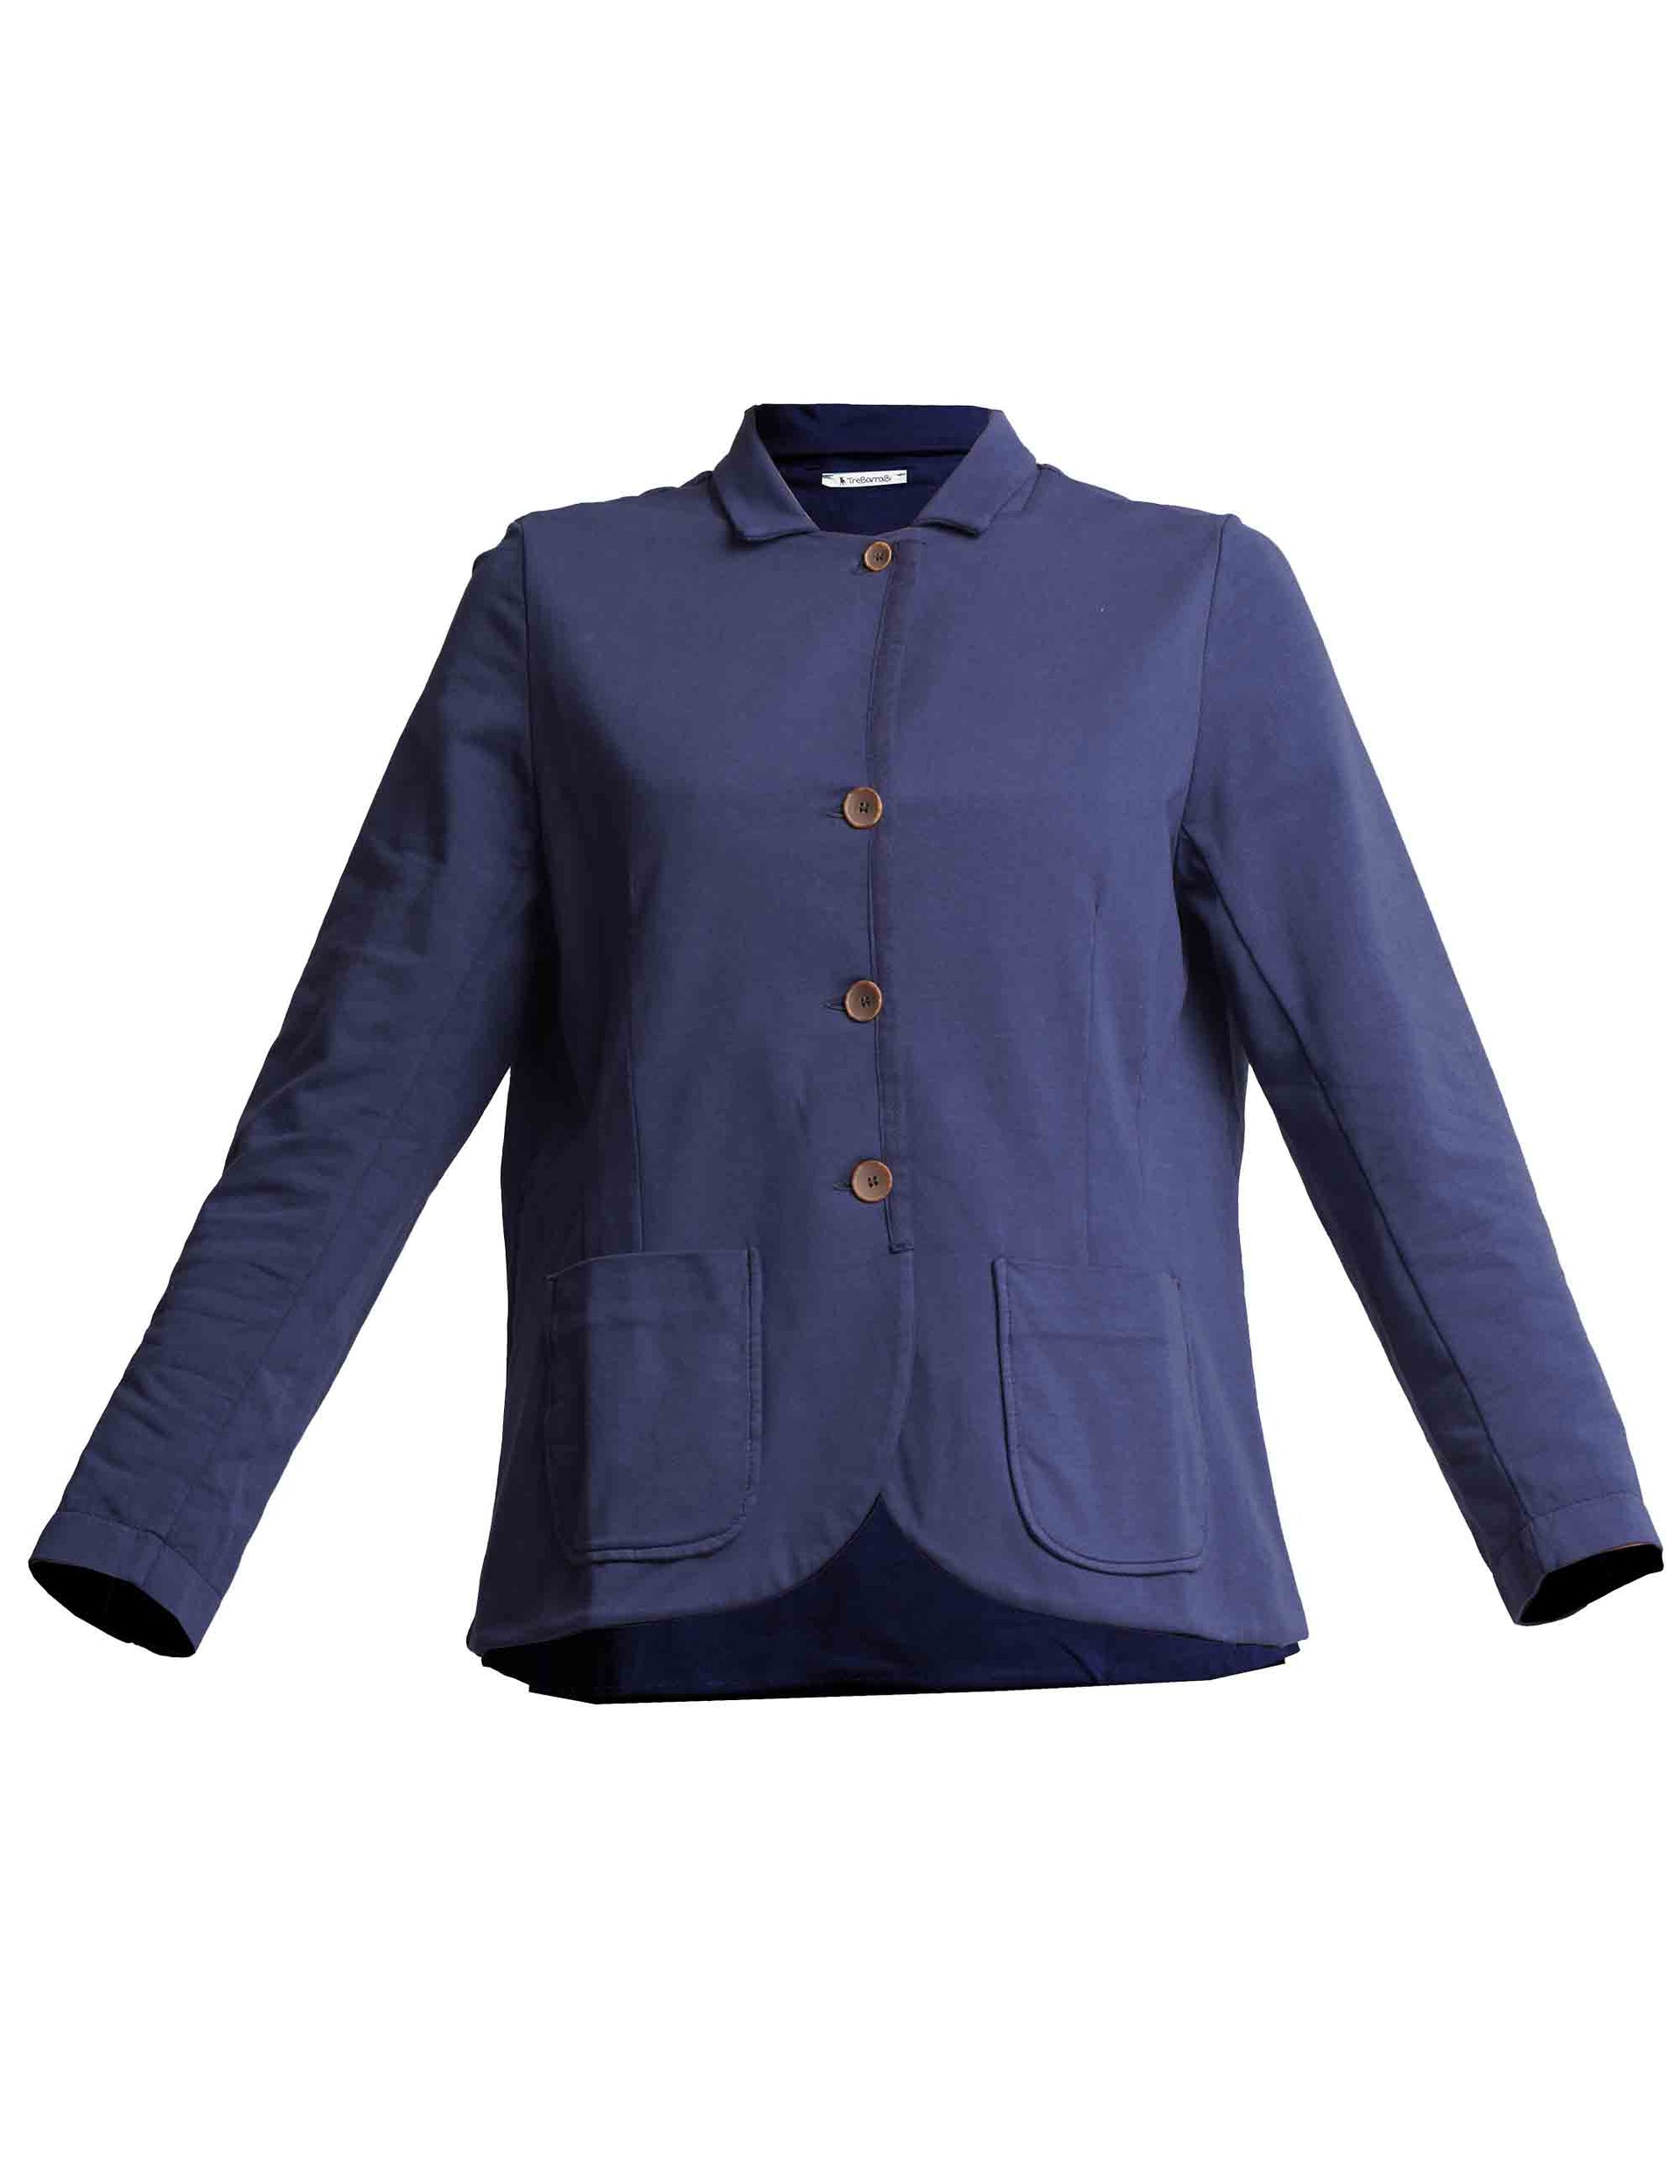 Women's long-sleeved sports jackets in blue cotton